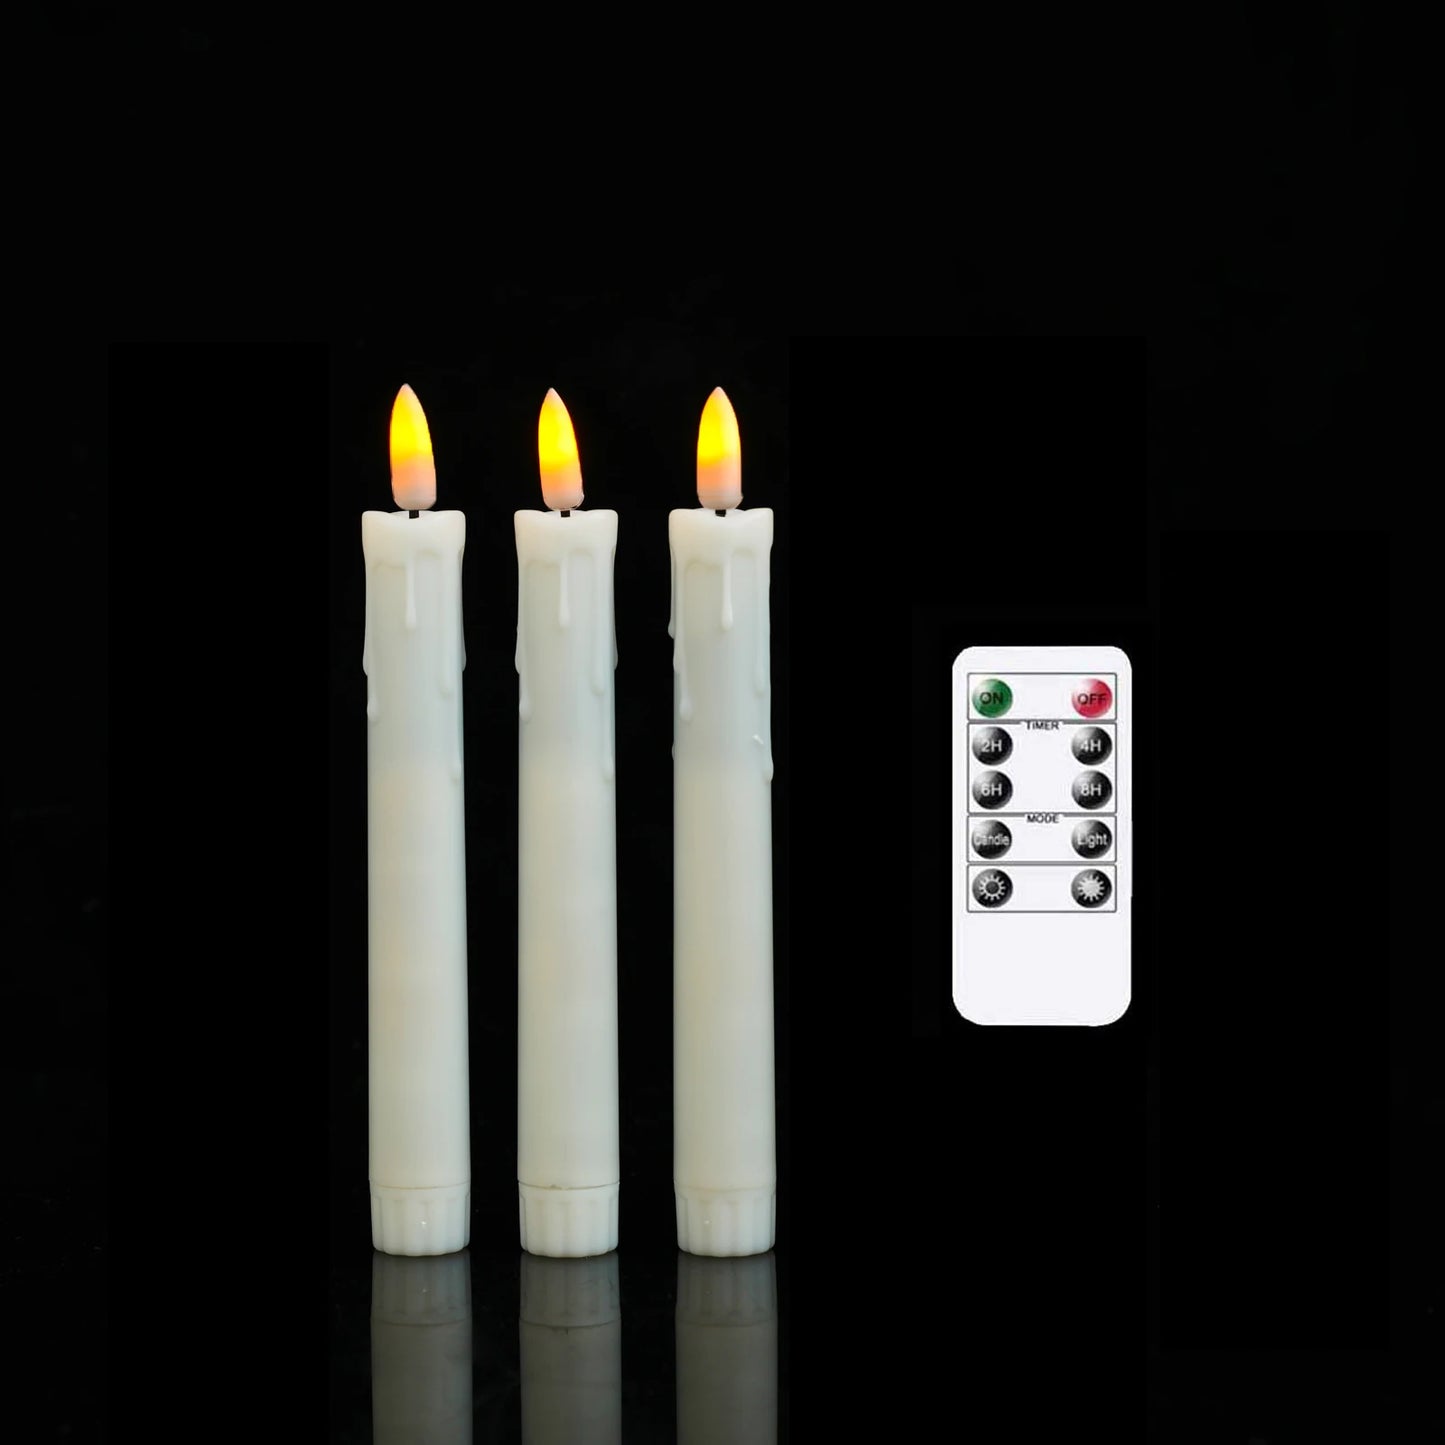 Paquete de 7 pulgadas de 3 control de vela decorativa de control remoto LED, velas electrónicas de boda electrónica sin batería con temporizador